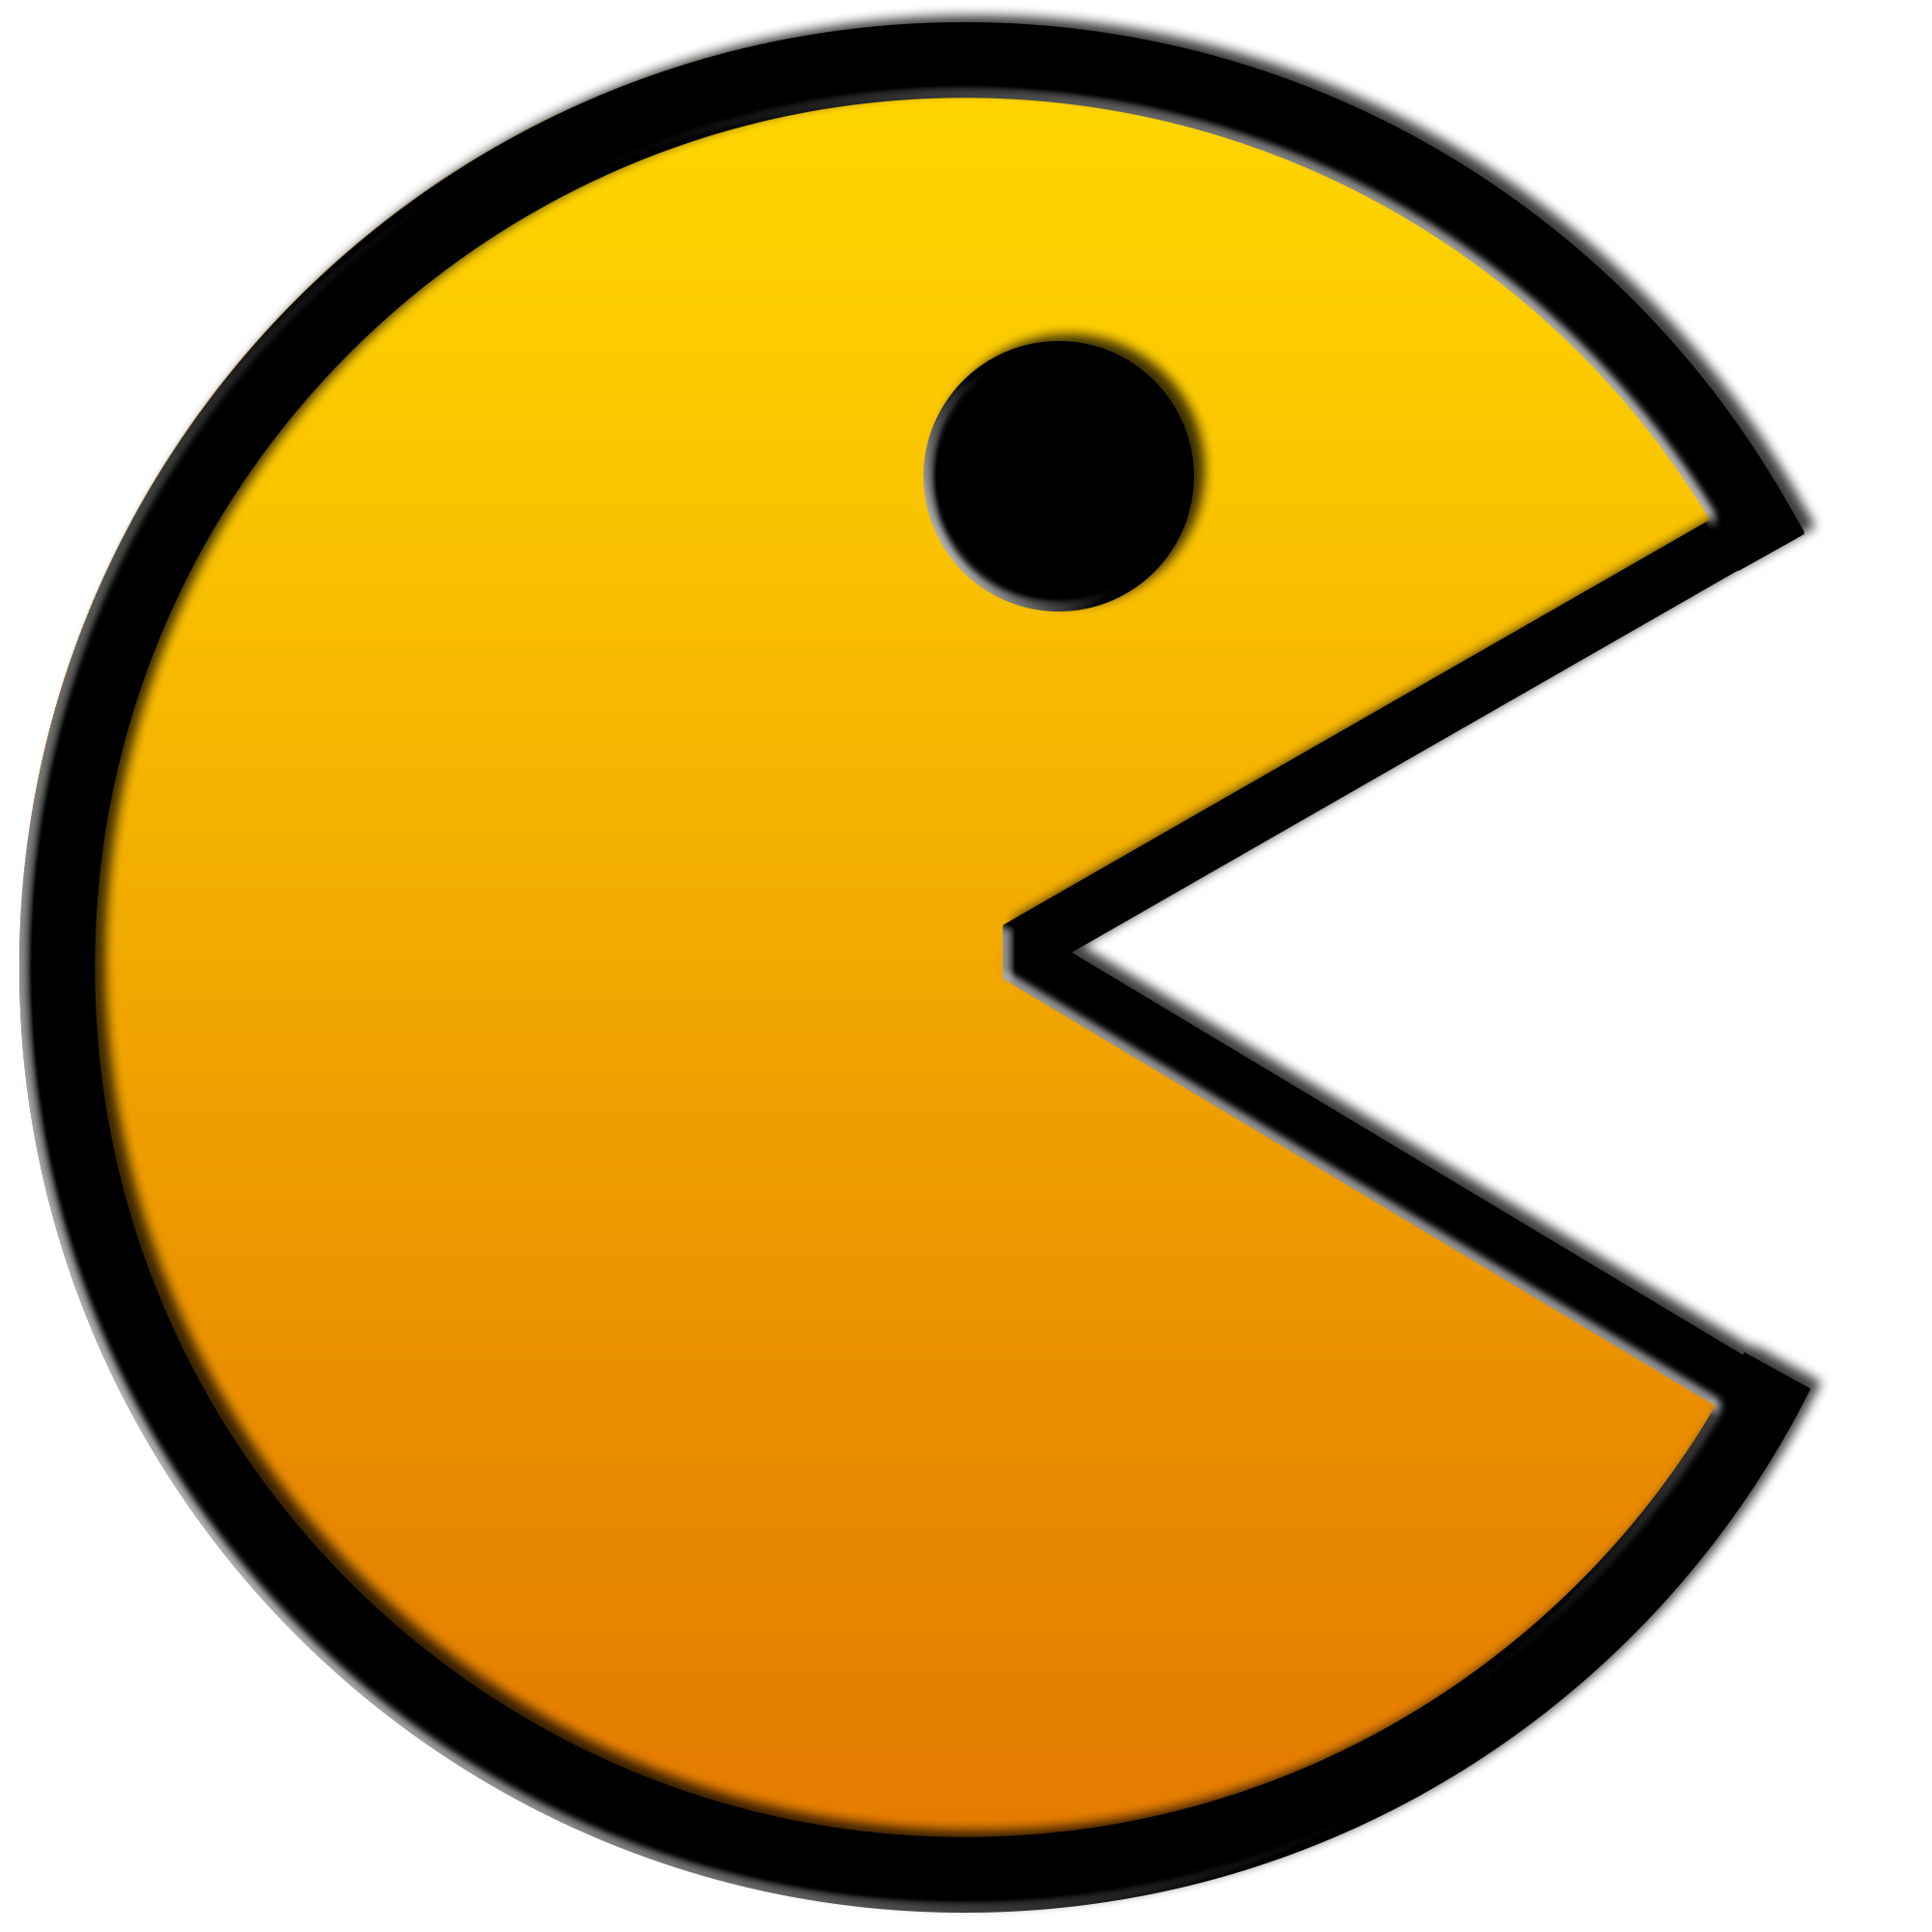 Download Pac-Man Agar.Io Ms. Game Video Games HQ PNG Image FreePNGImg.